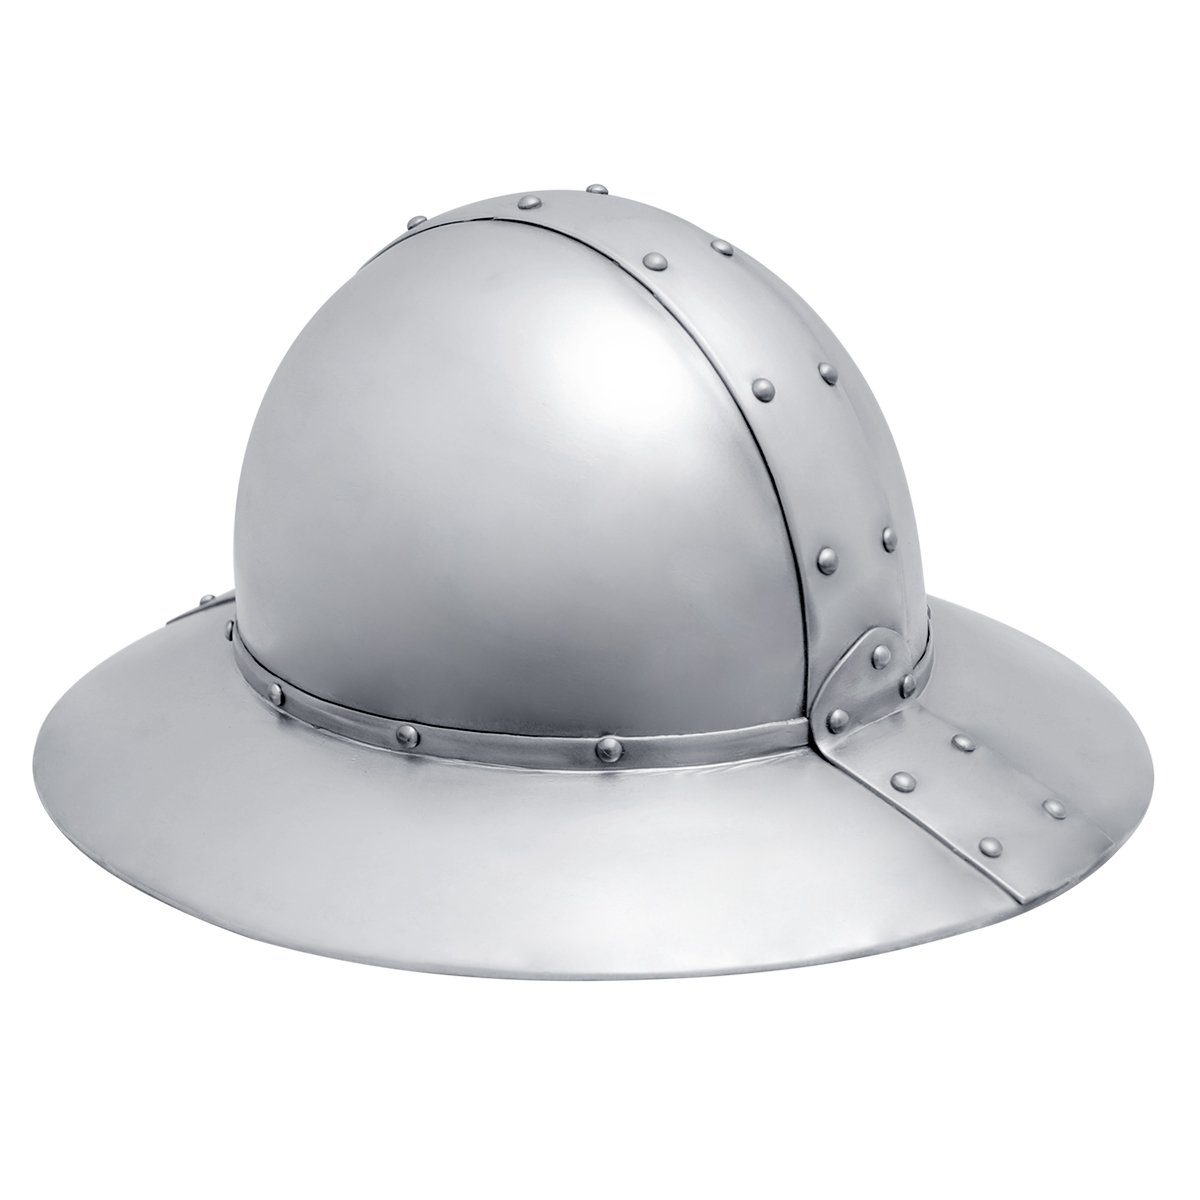 XIII th C Kettle Hat helmet, Size M